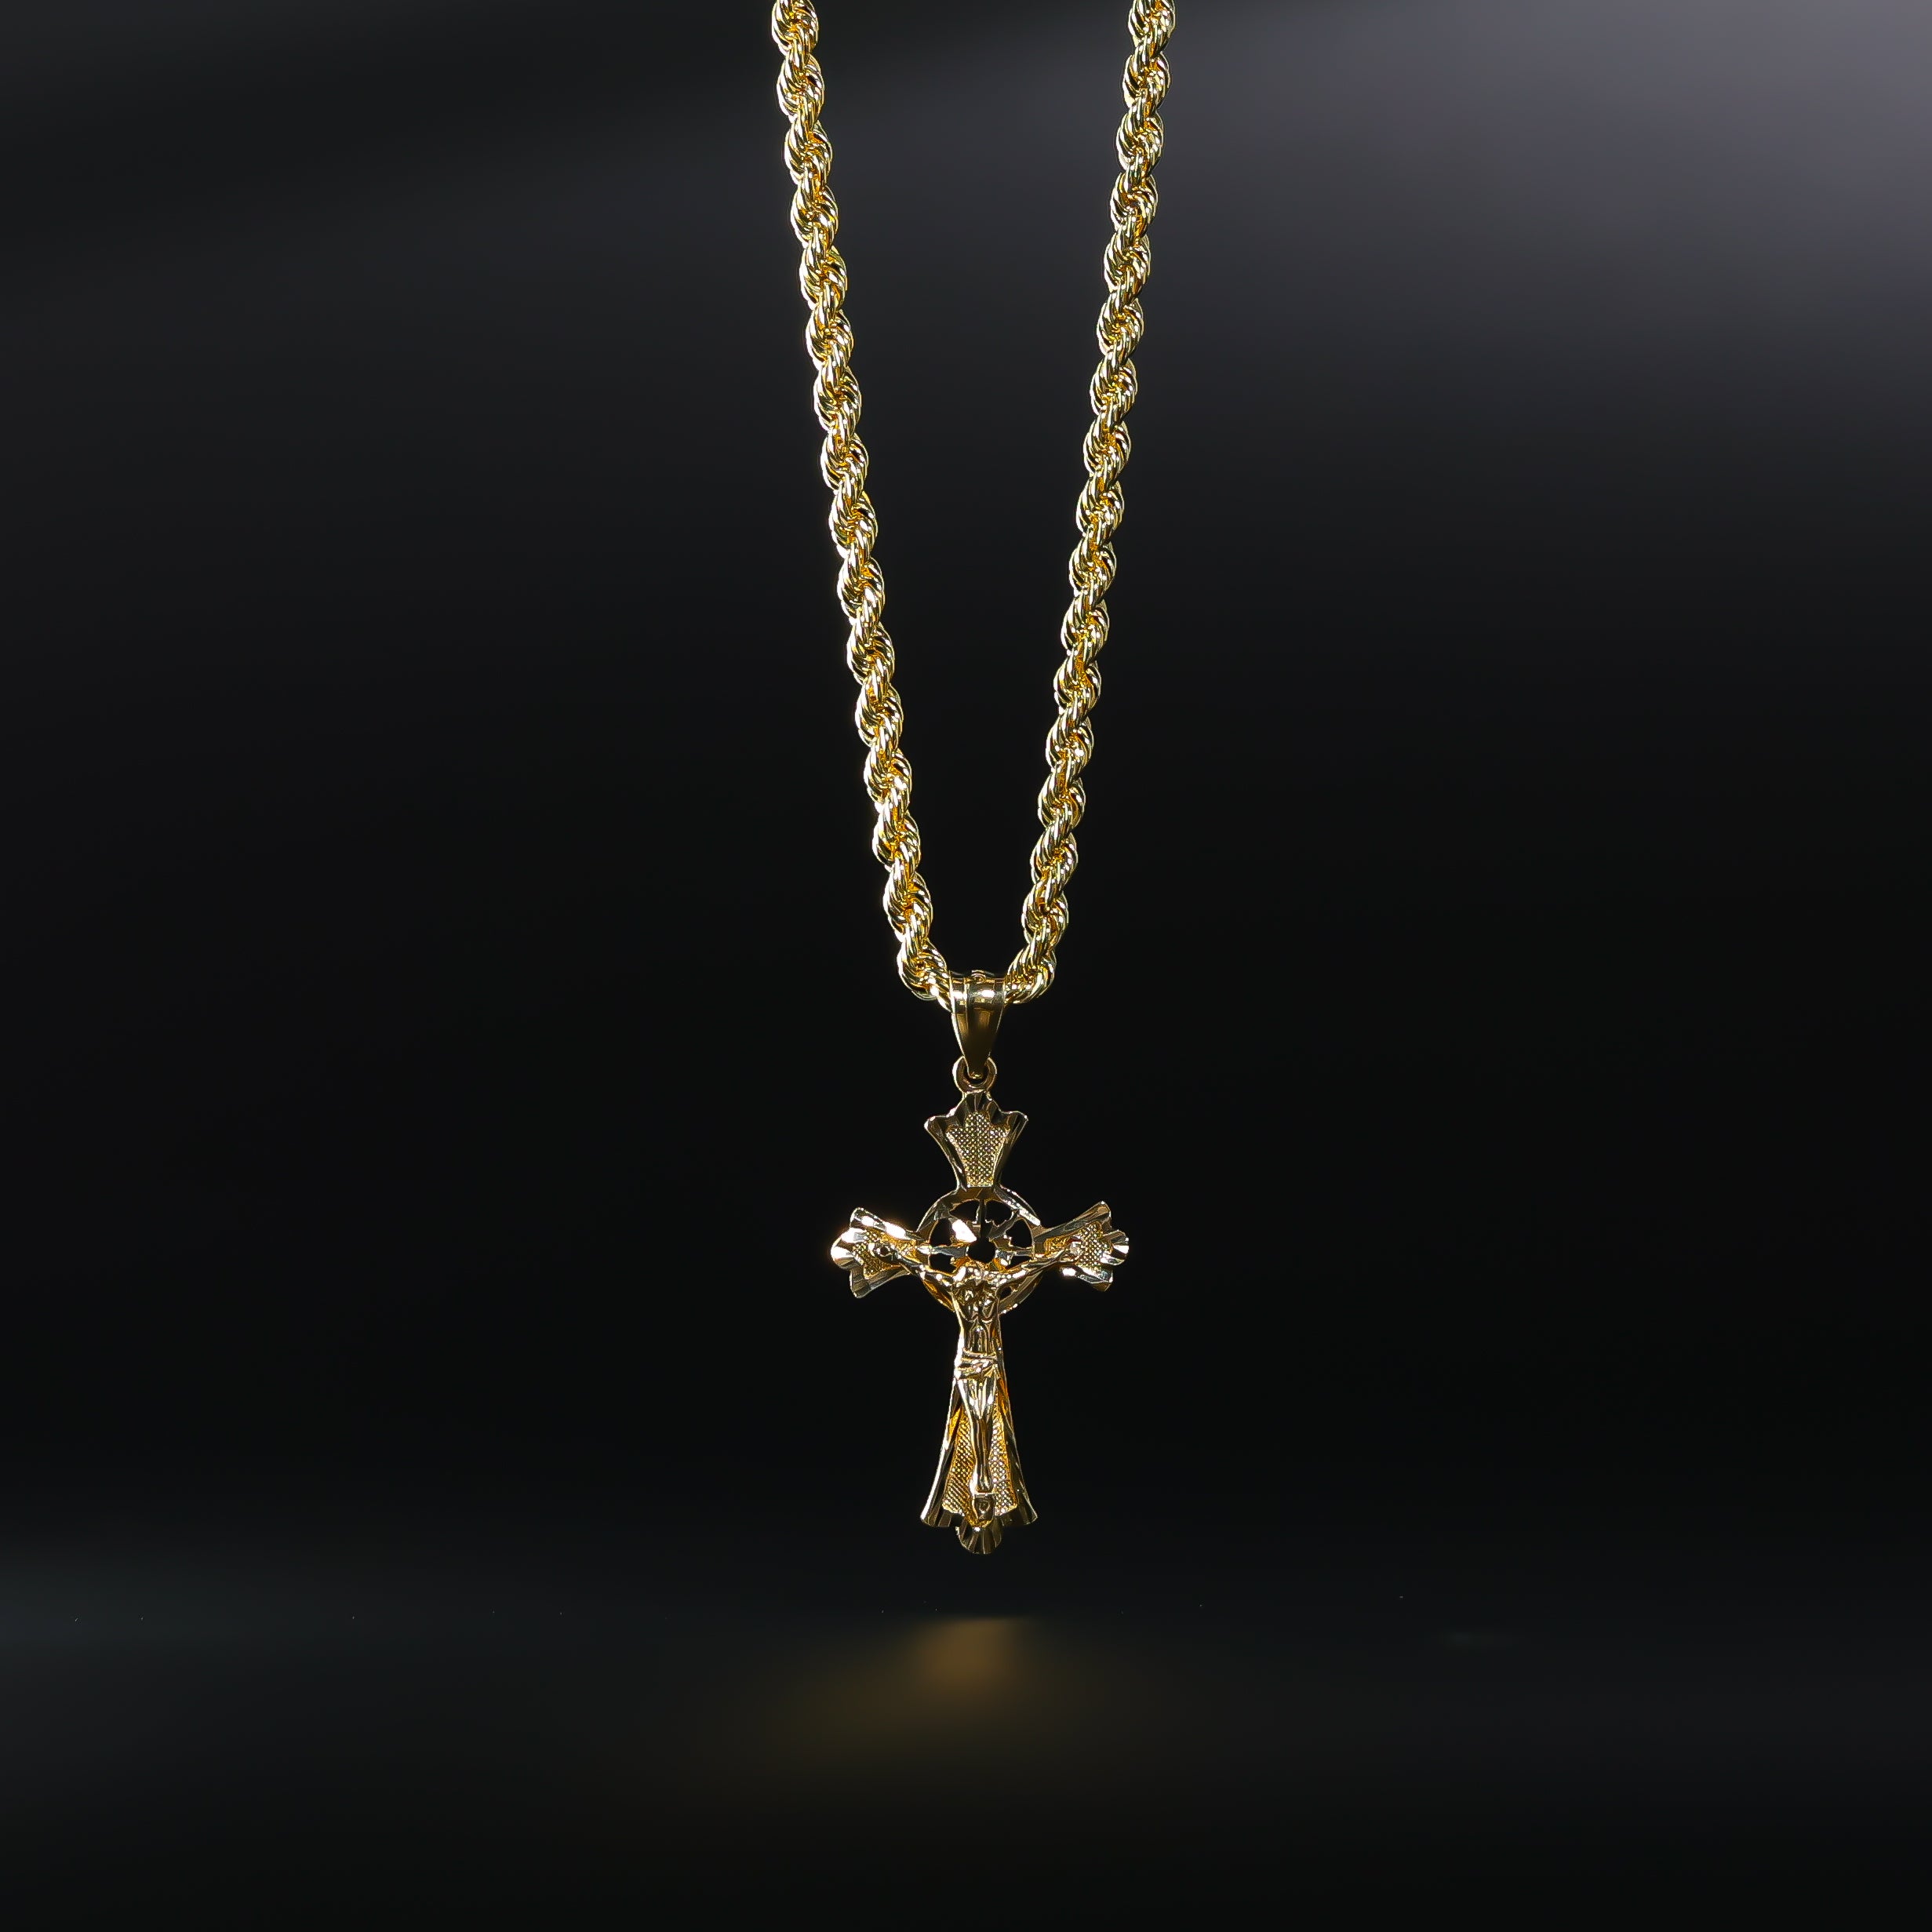 Gold Jesus Crucifix Cross Pendant Model-1004 - Charlie & Co. Jewelry